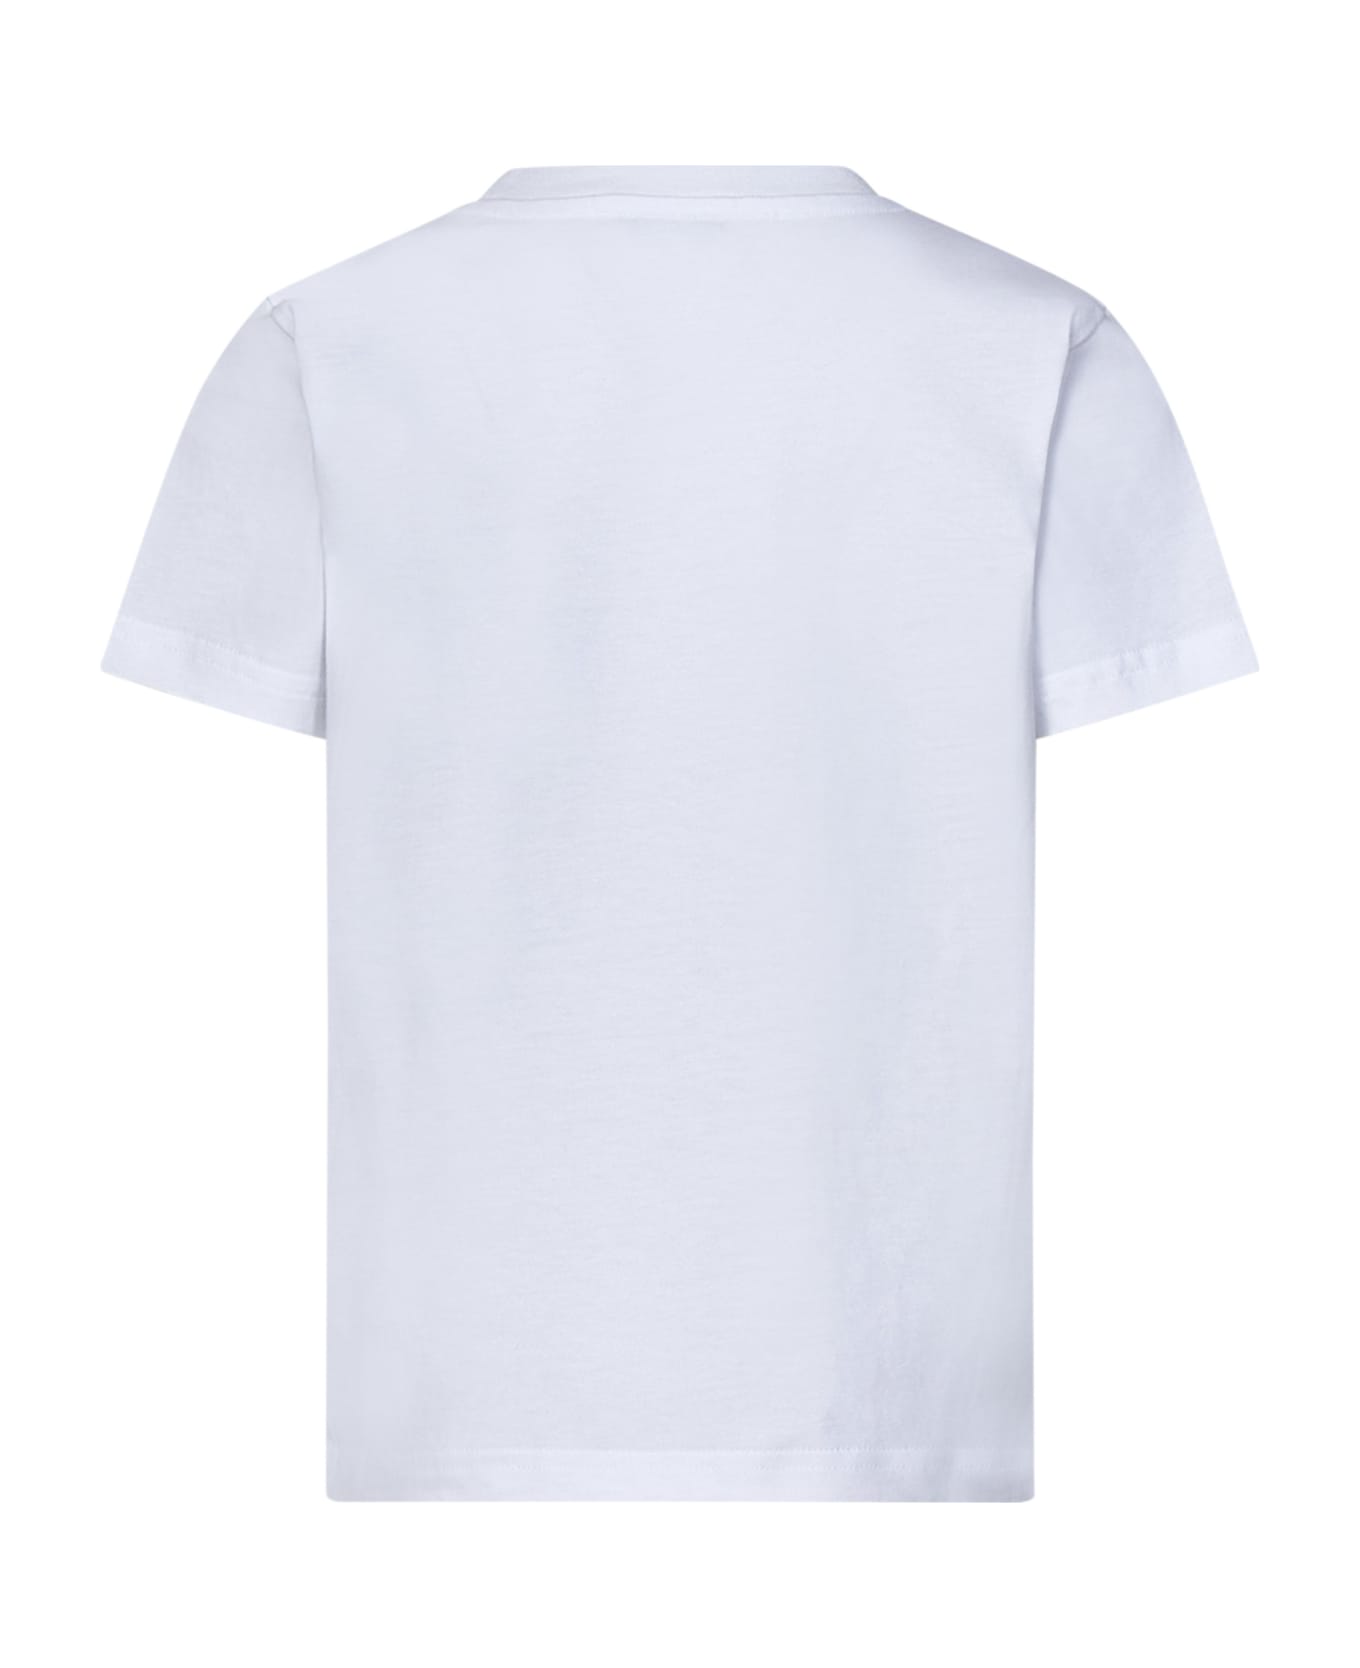 Moncler Enfant T-shirt - White